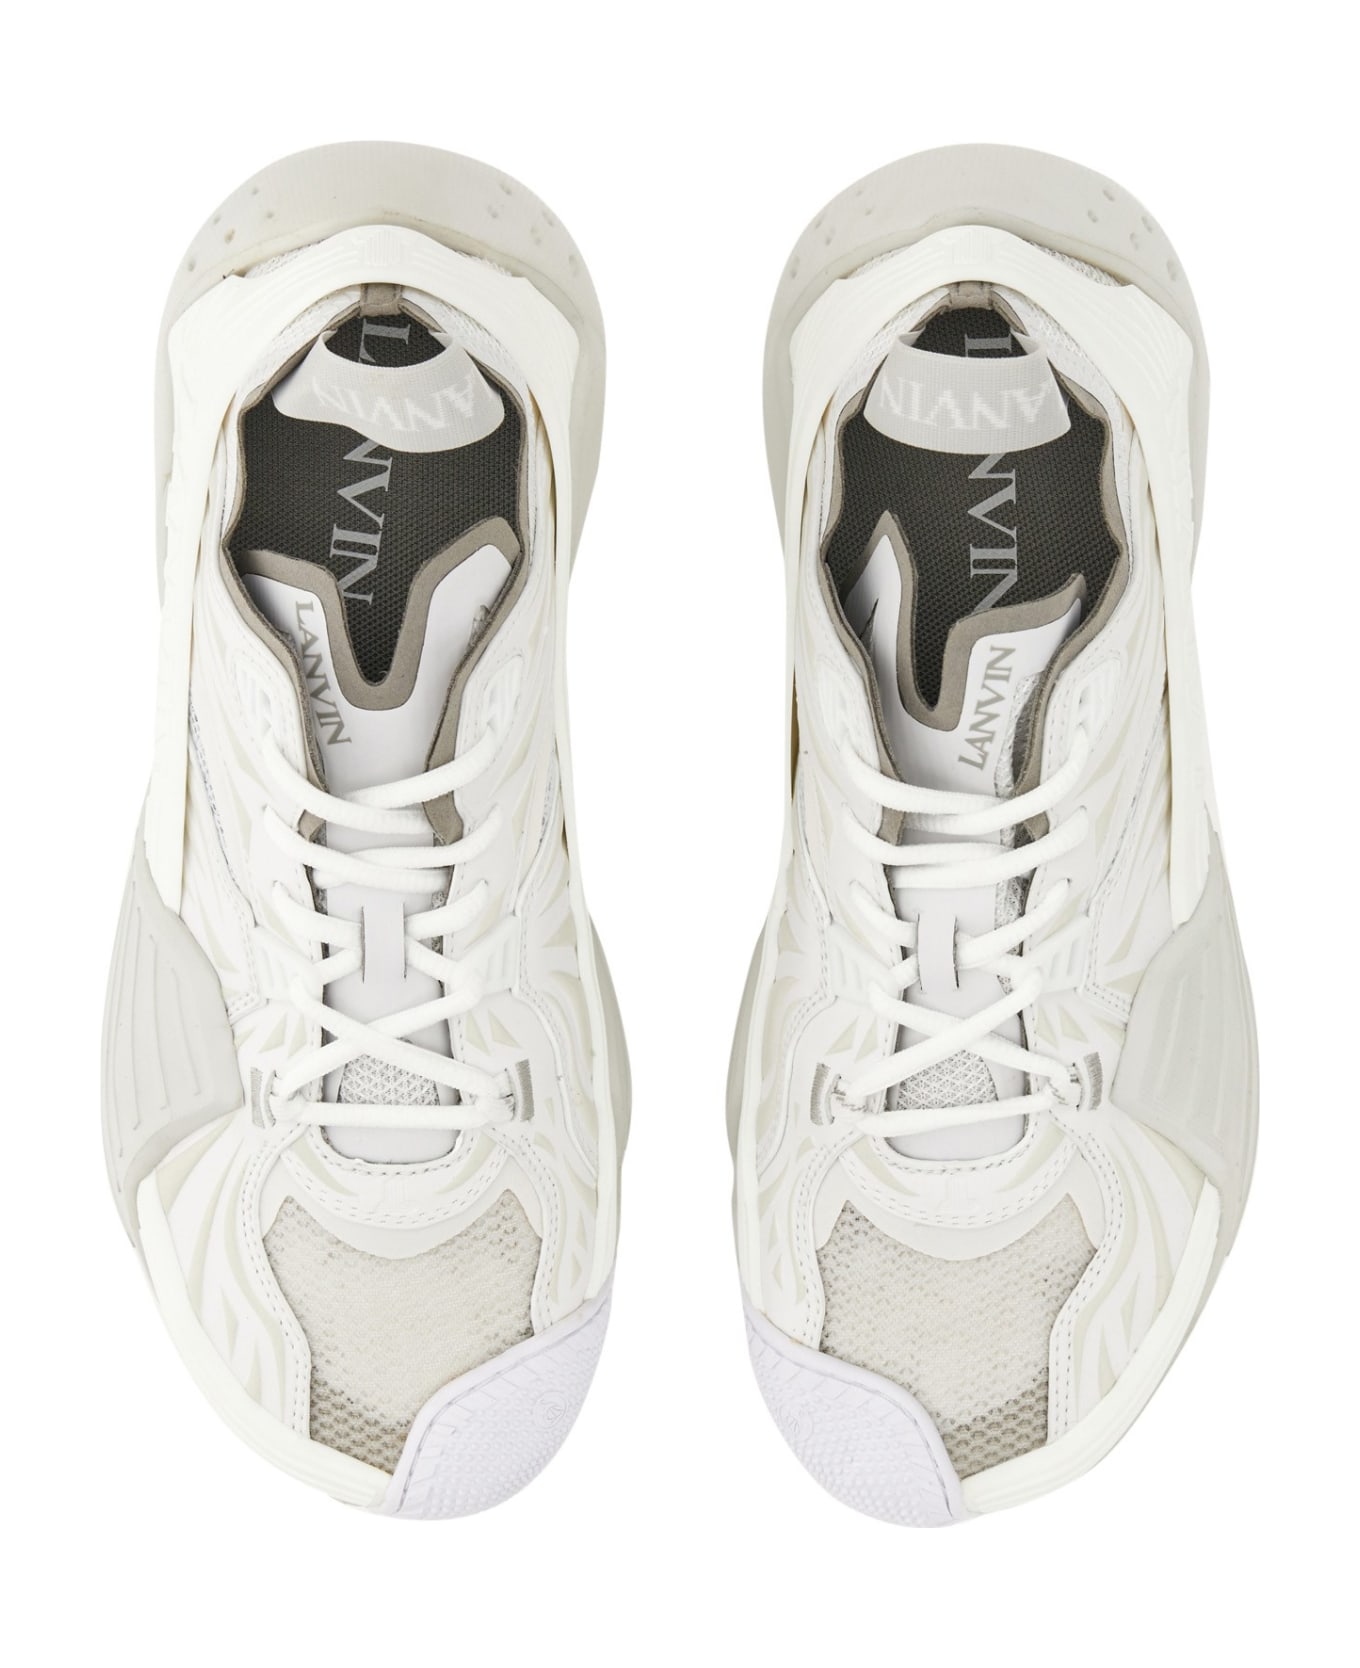 Lanvin Flash-x Sneakers - White スニーカー